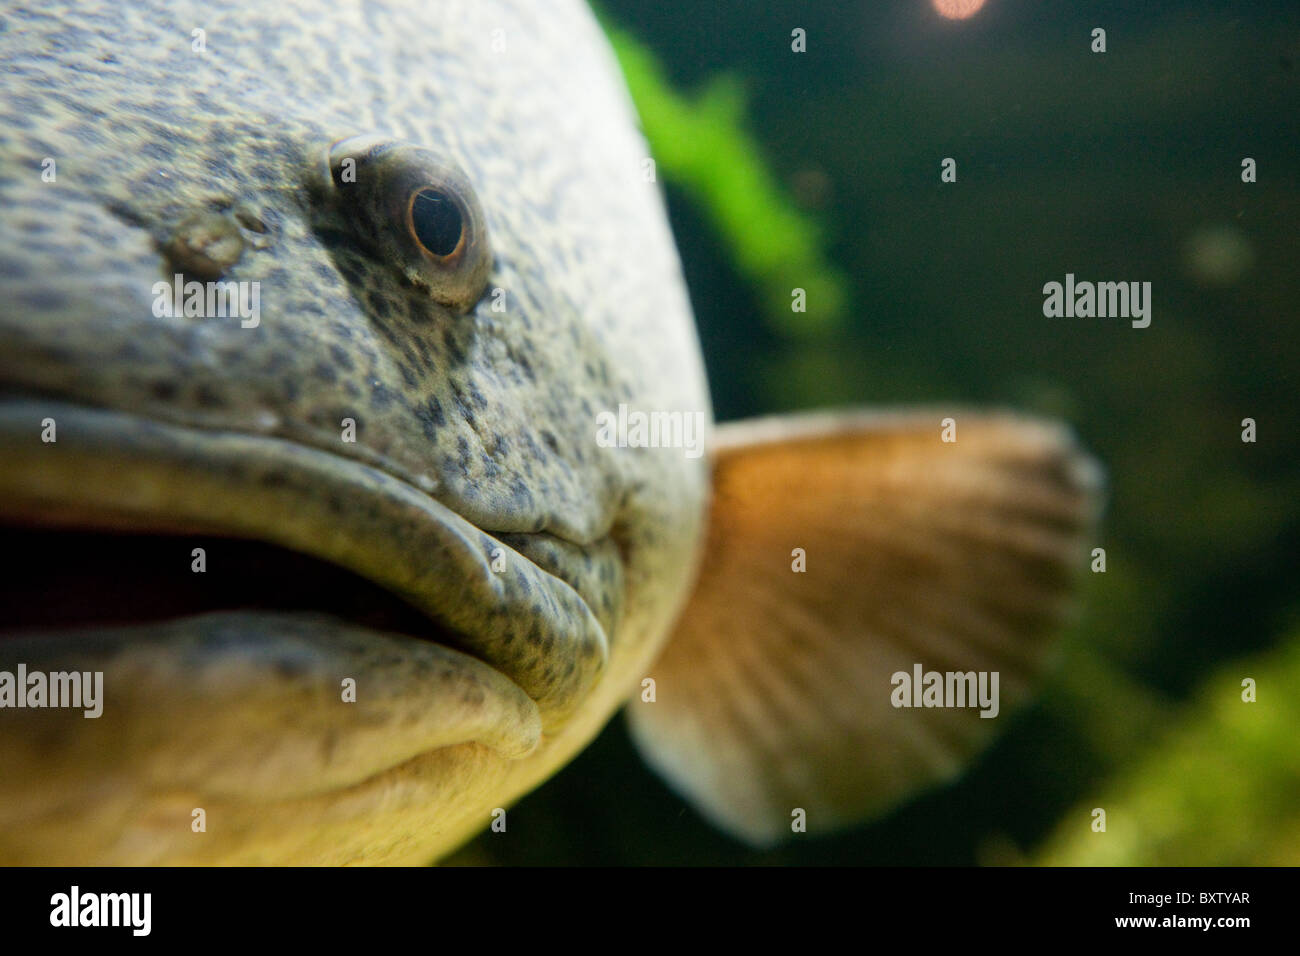 Australia New South Wales Sydney Close-up of Murray Cod (Maccullochella peelii peelii) swimming in fish tank at Sydney Aquarium Stock Photo